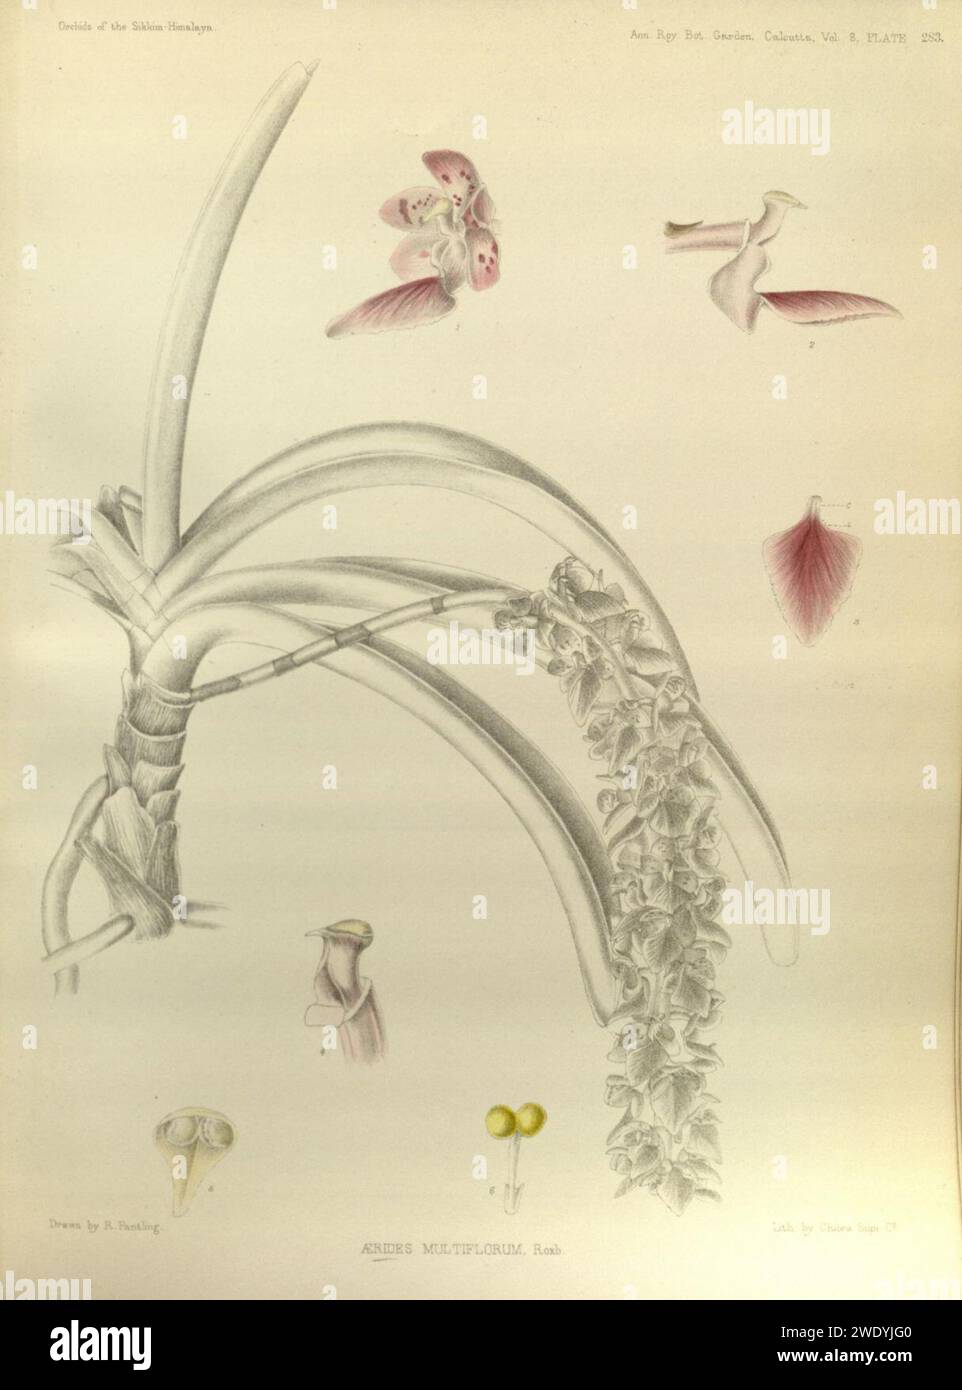 Aerides multiflora (as Aerides multiflorum) - The Orchids of the Sikkim-Himalaya pl 283 (1898). Stock Photo